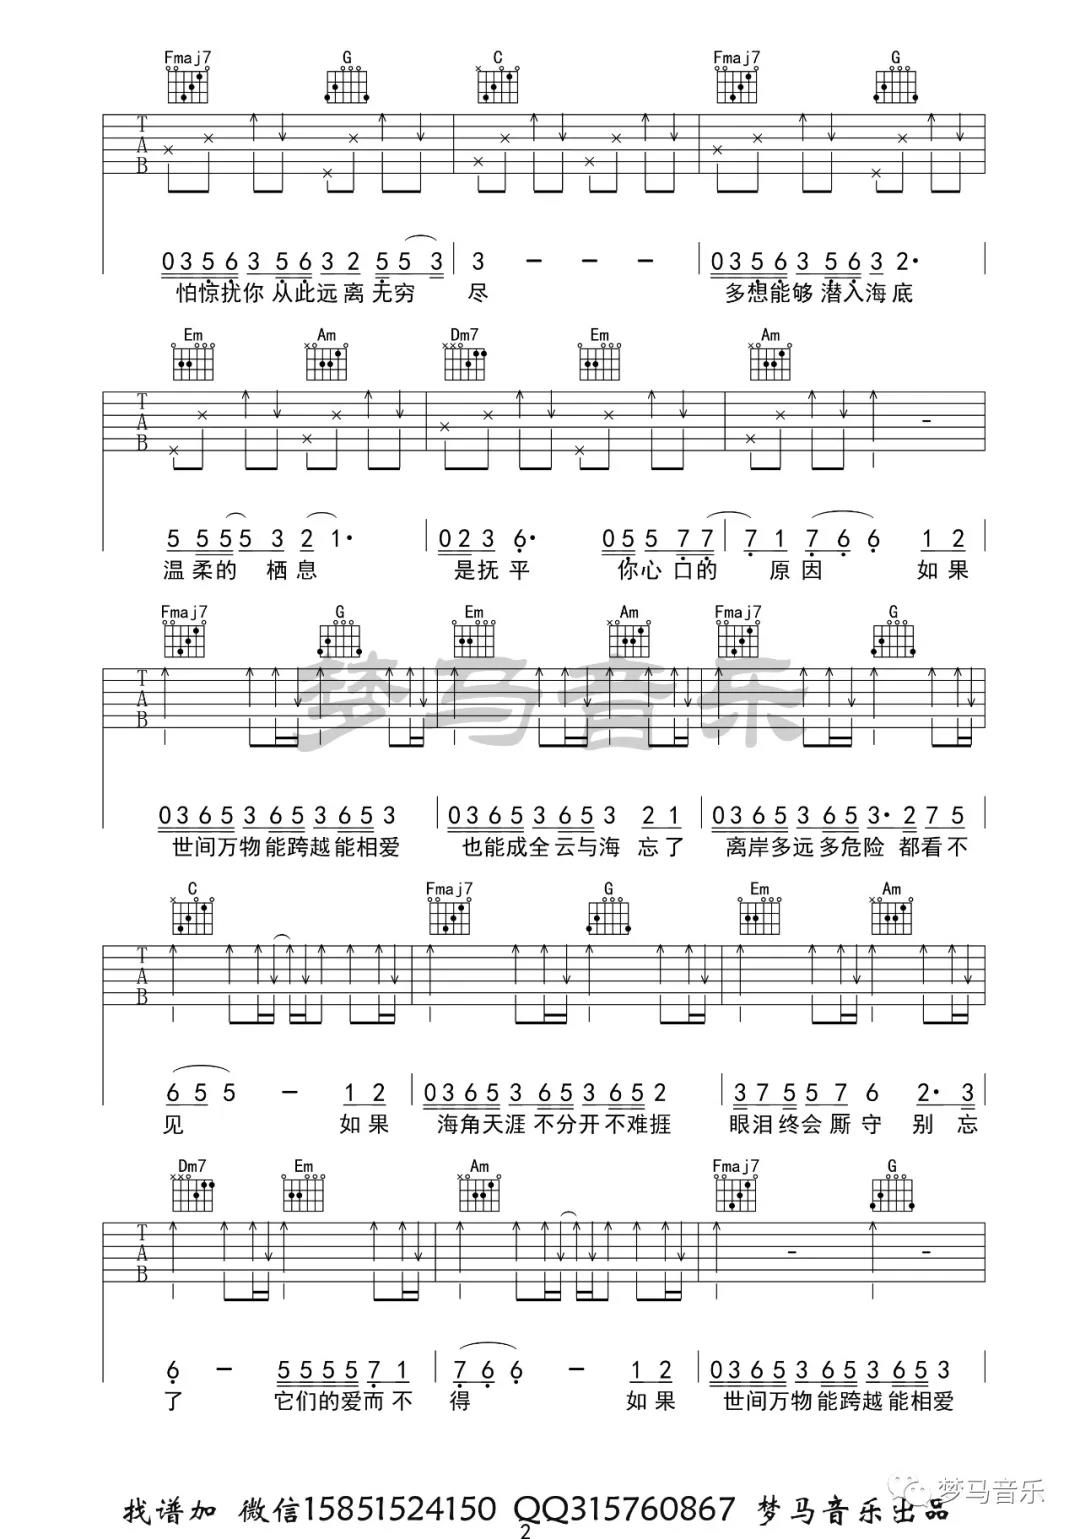 阿YueYue《云与海》吉他谱(C调)-Guitar Music Score